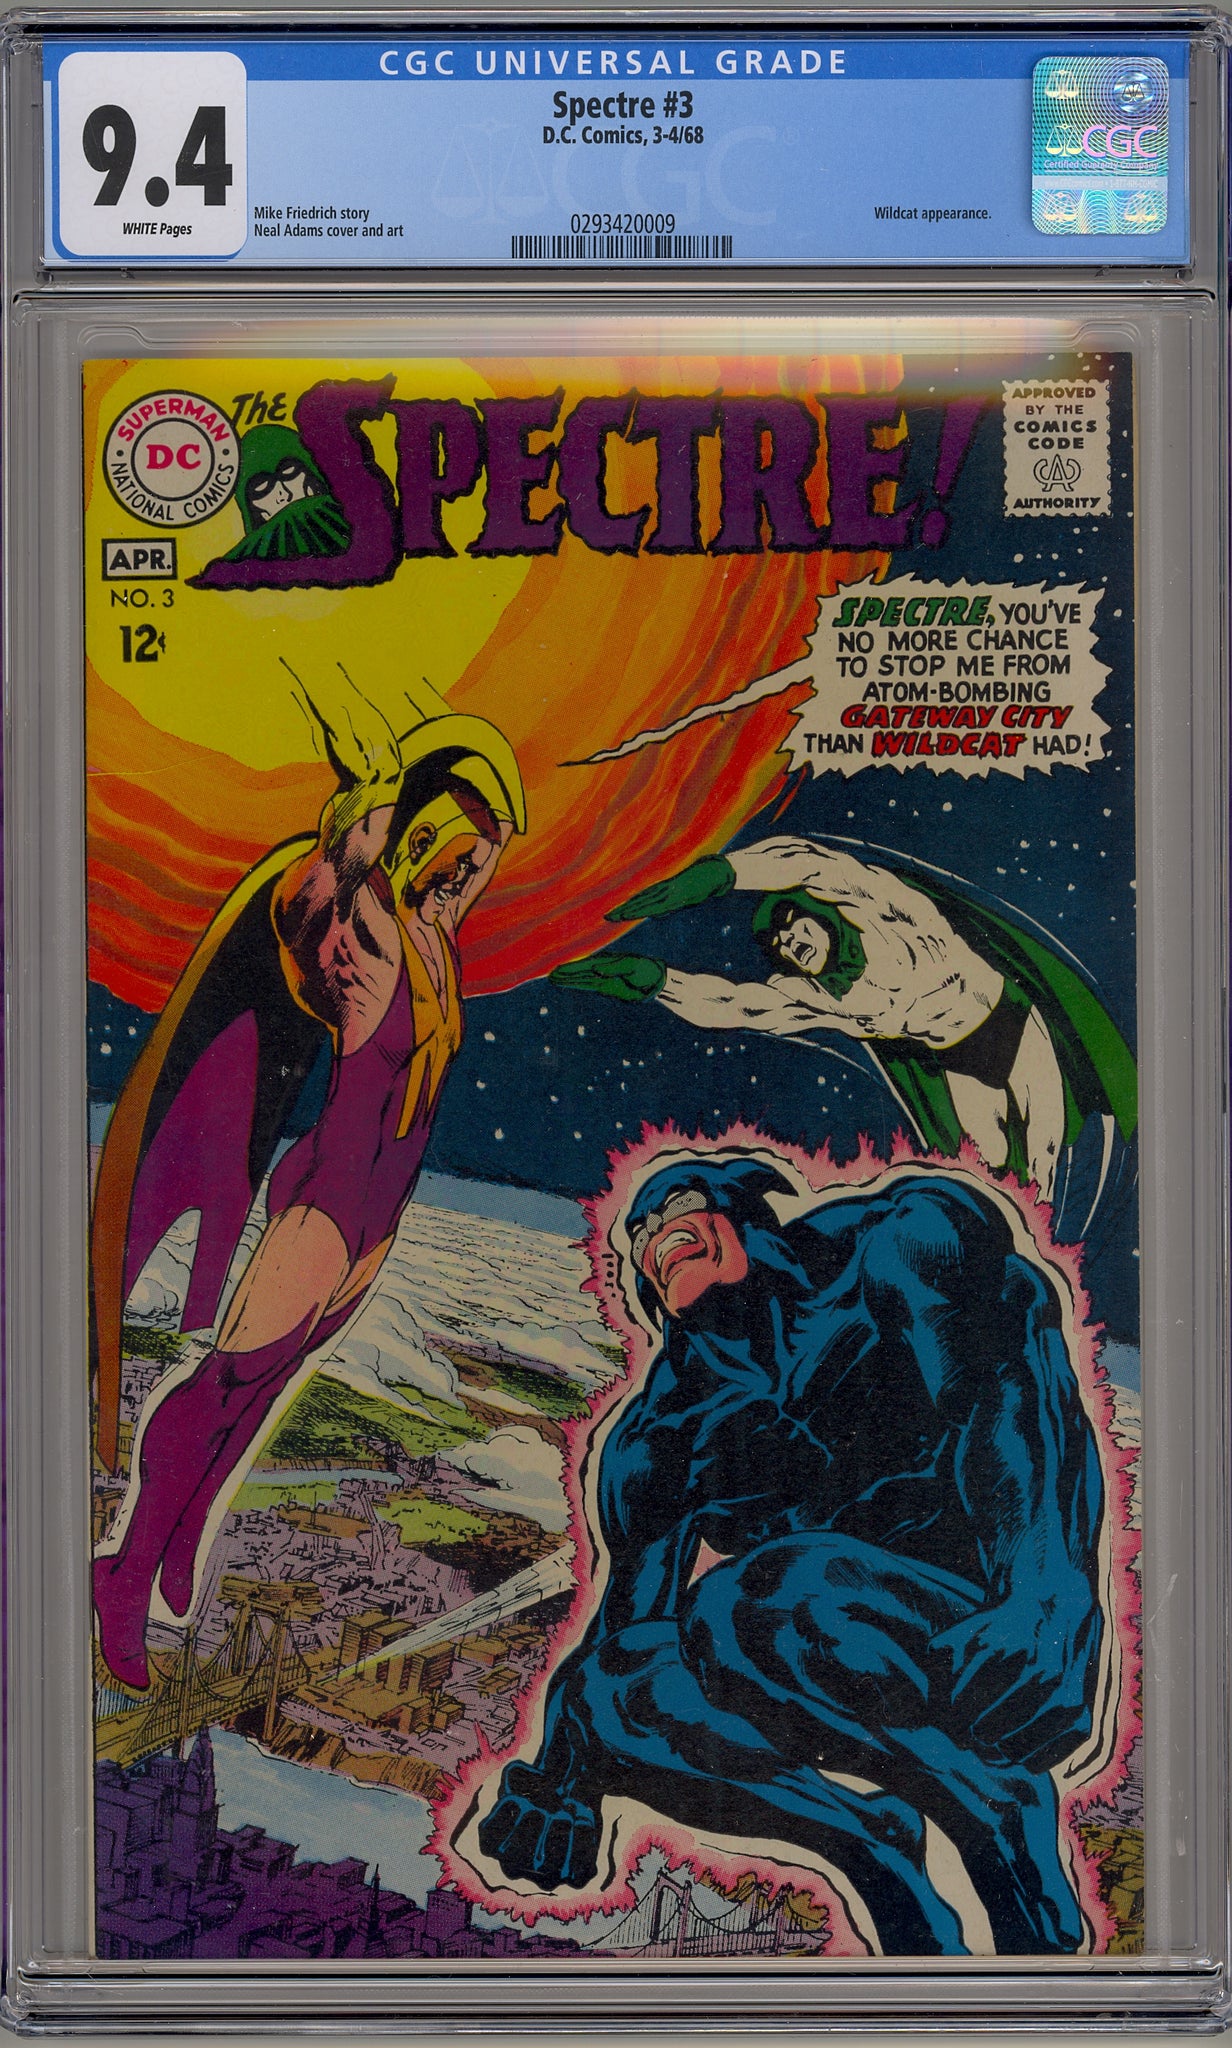 Spectre, The #3 (1968)